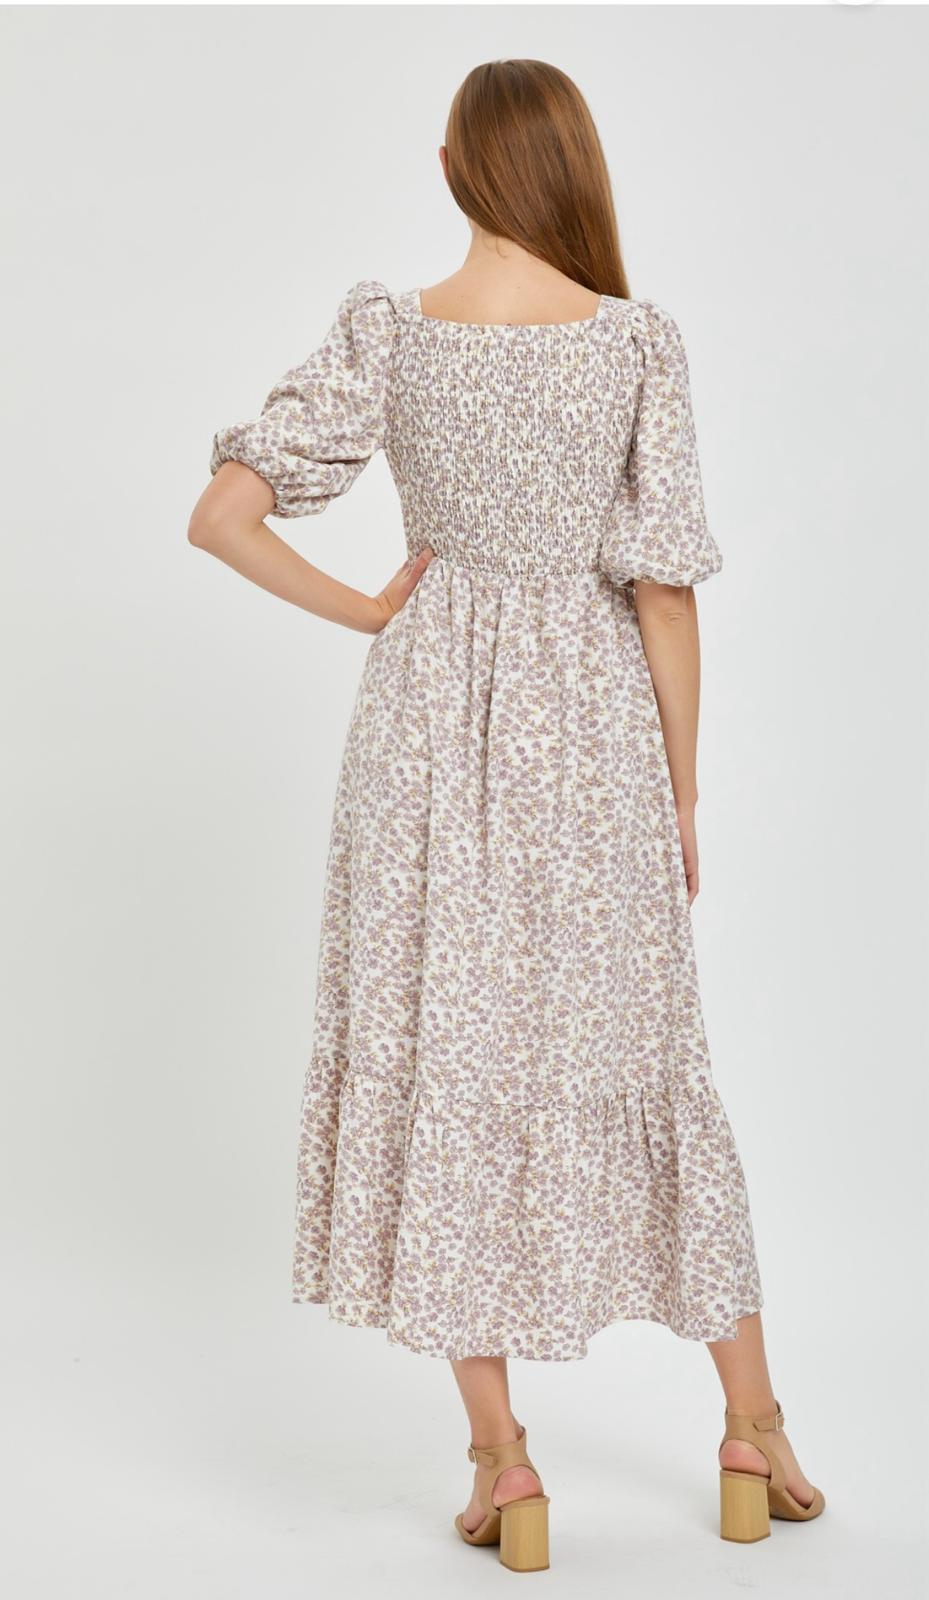 Dulce Lavender Dress (Restock)